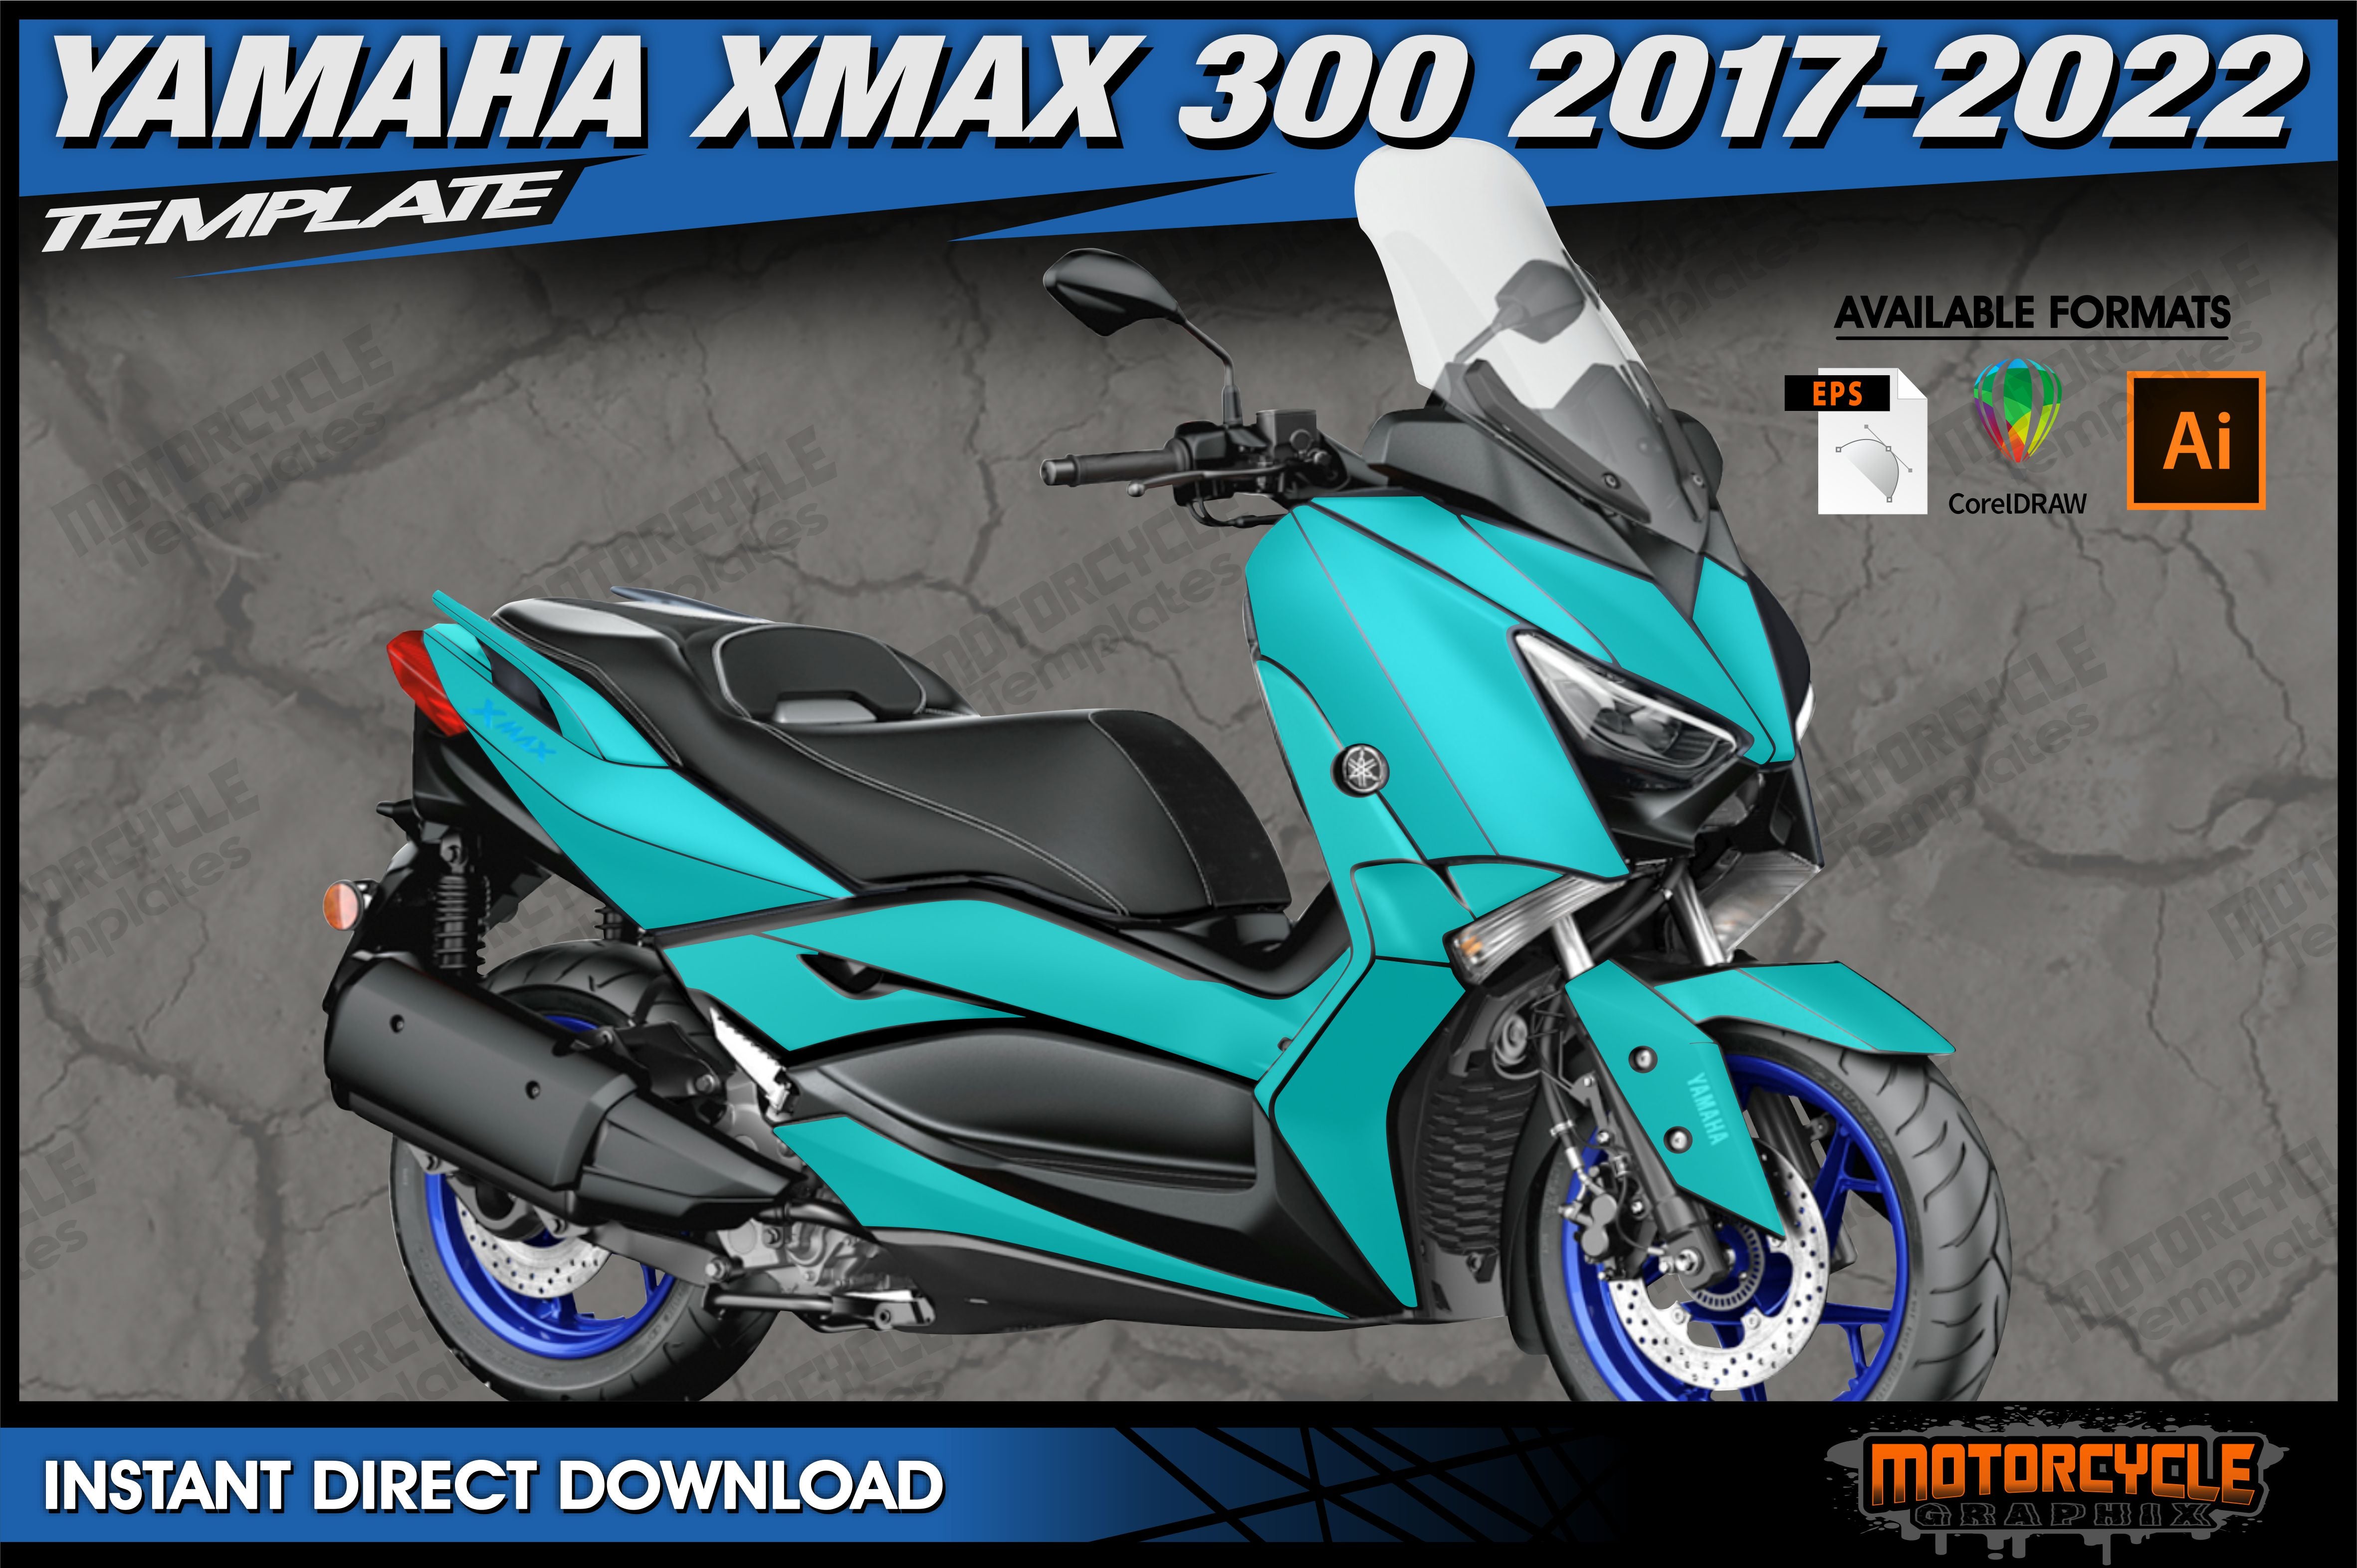 YAMAHA XMAX 300 2017-2022 – MOTORCYCLE TEMPLATES